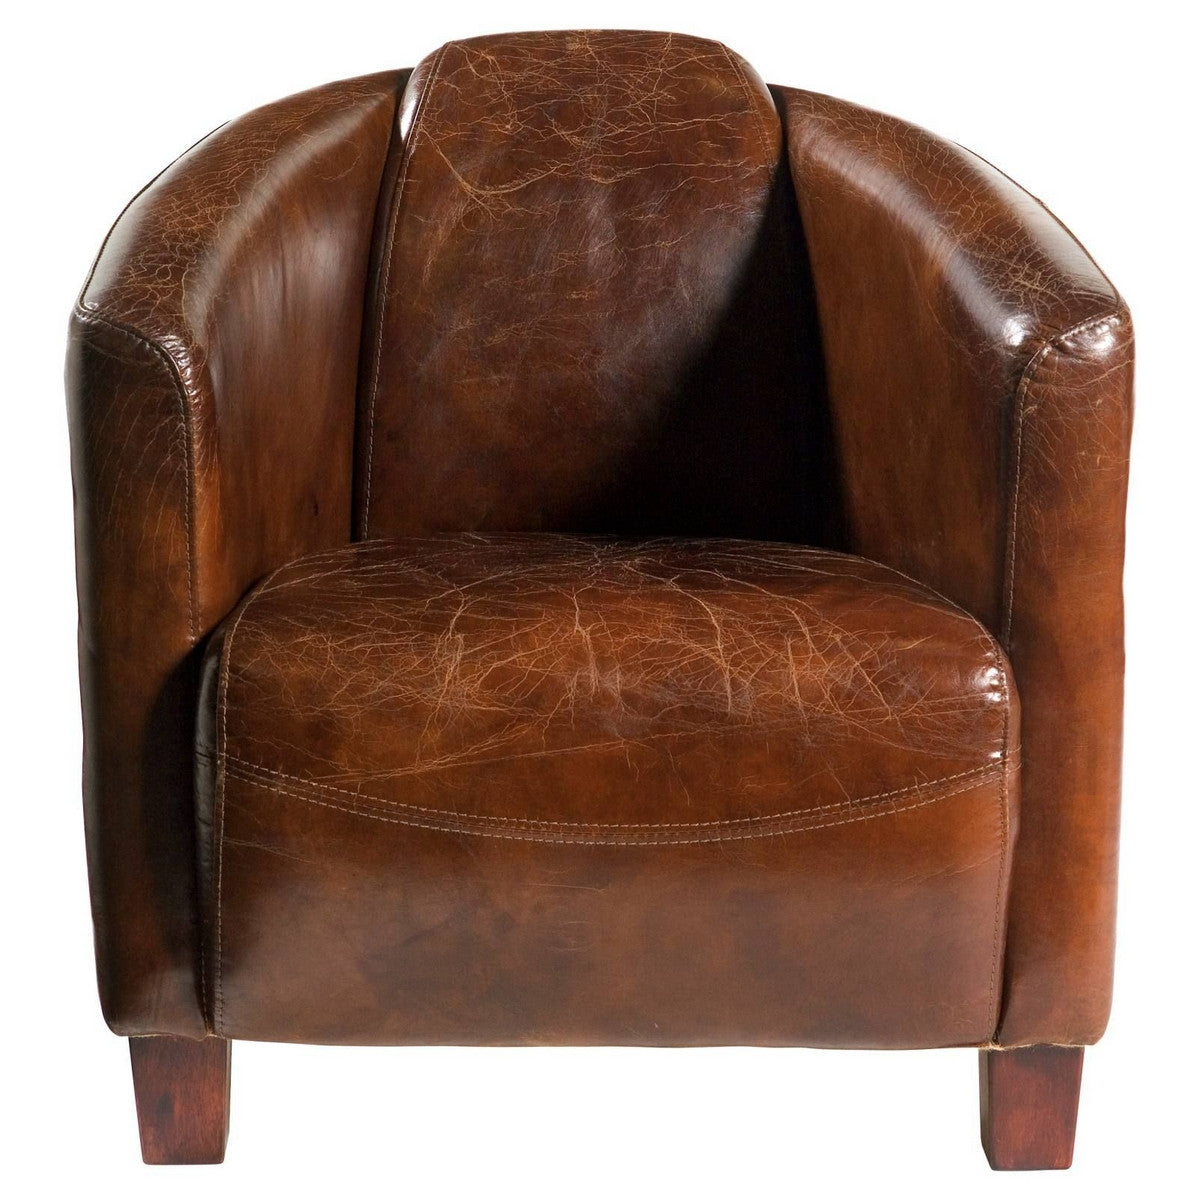 Vanguard aged Leather Arm Chair